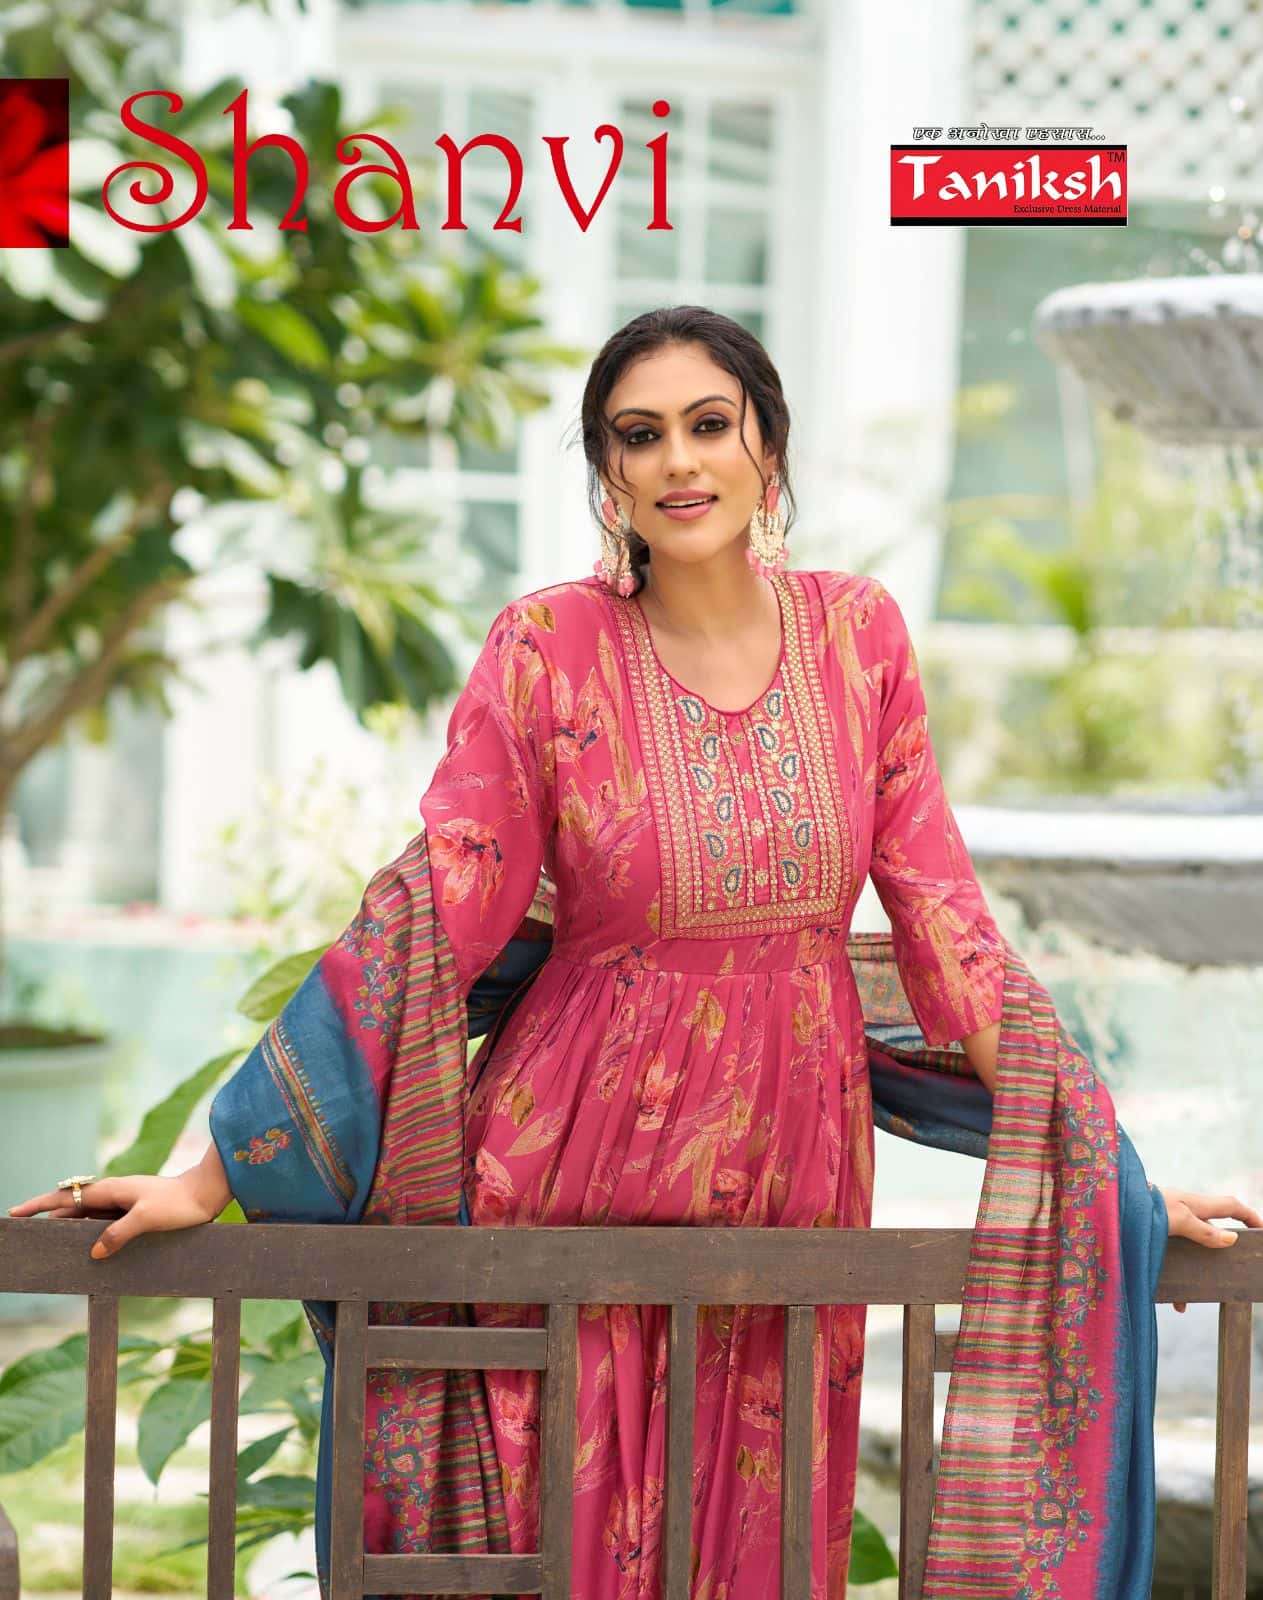 Taniksh Shanvi Vol 1 Nayra pattern readymade Dress New Collection